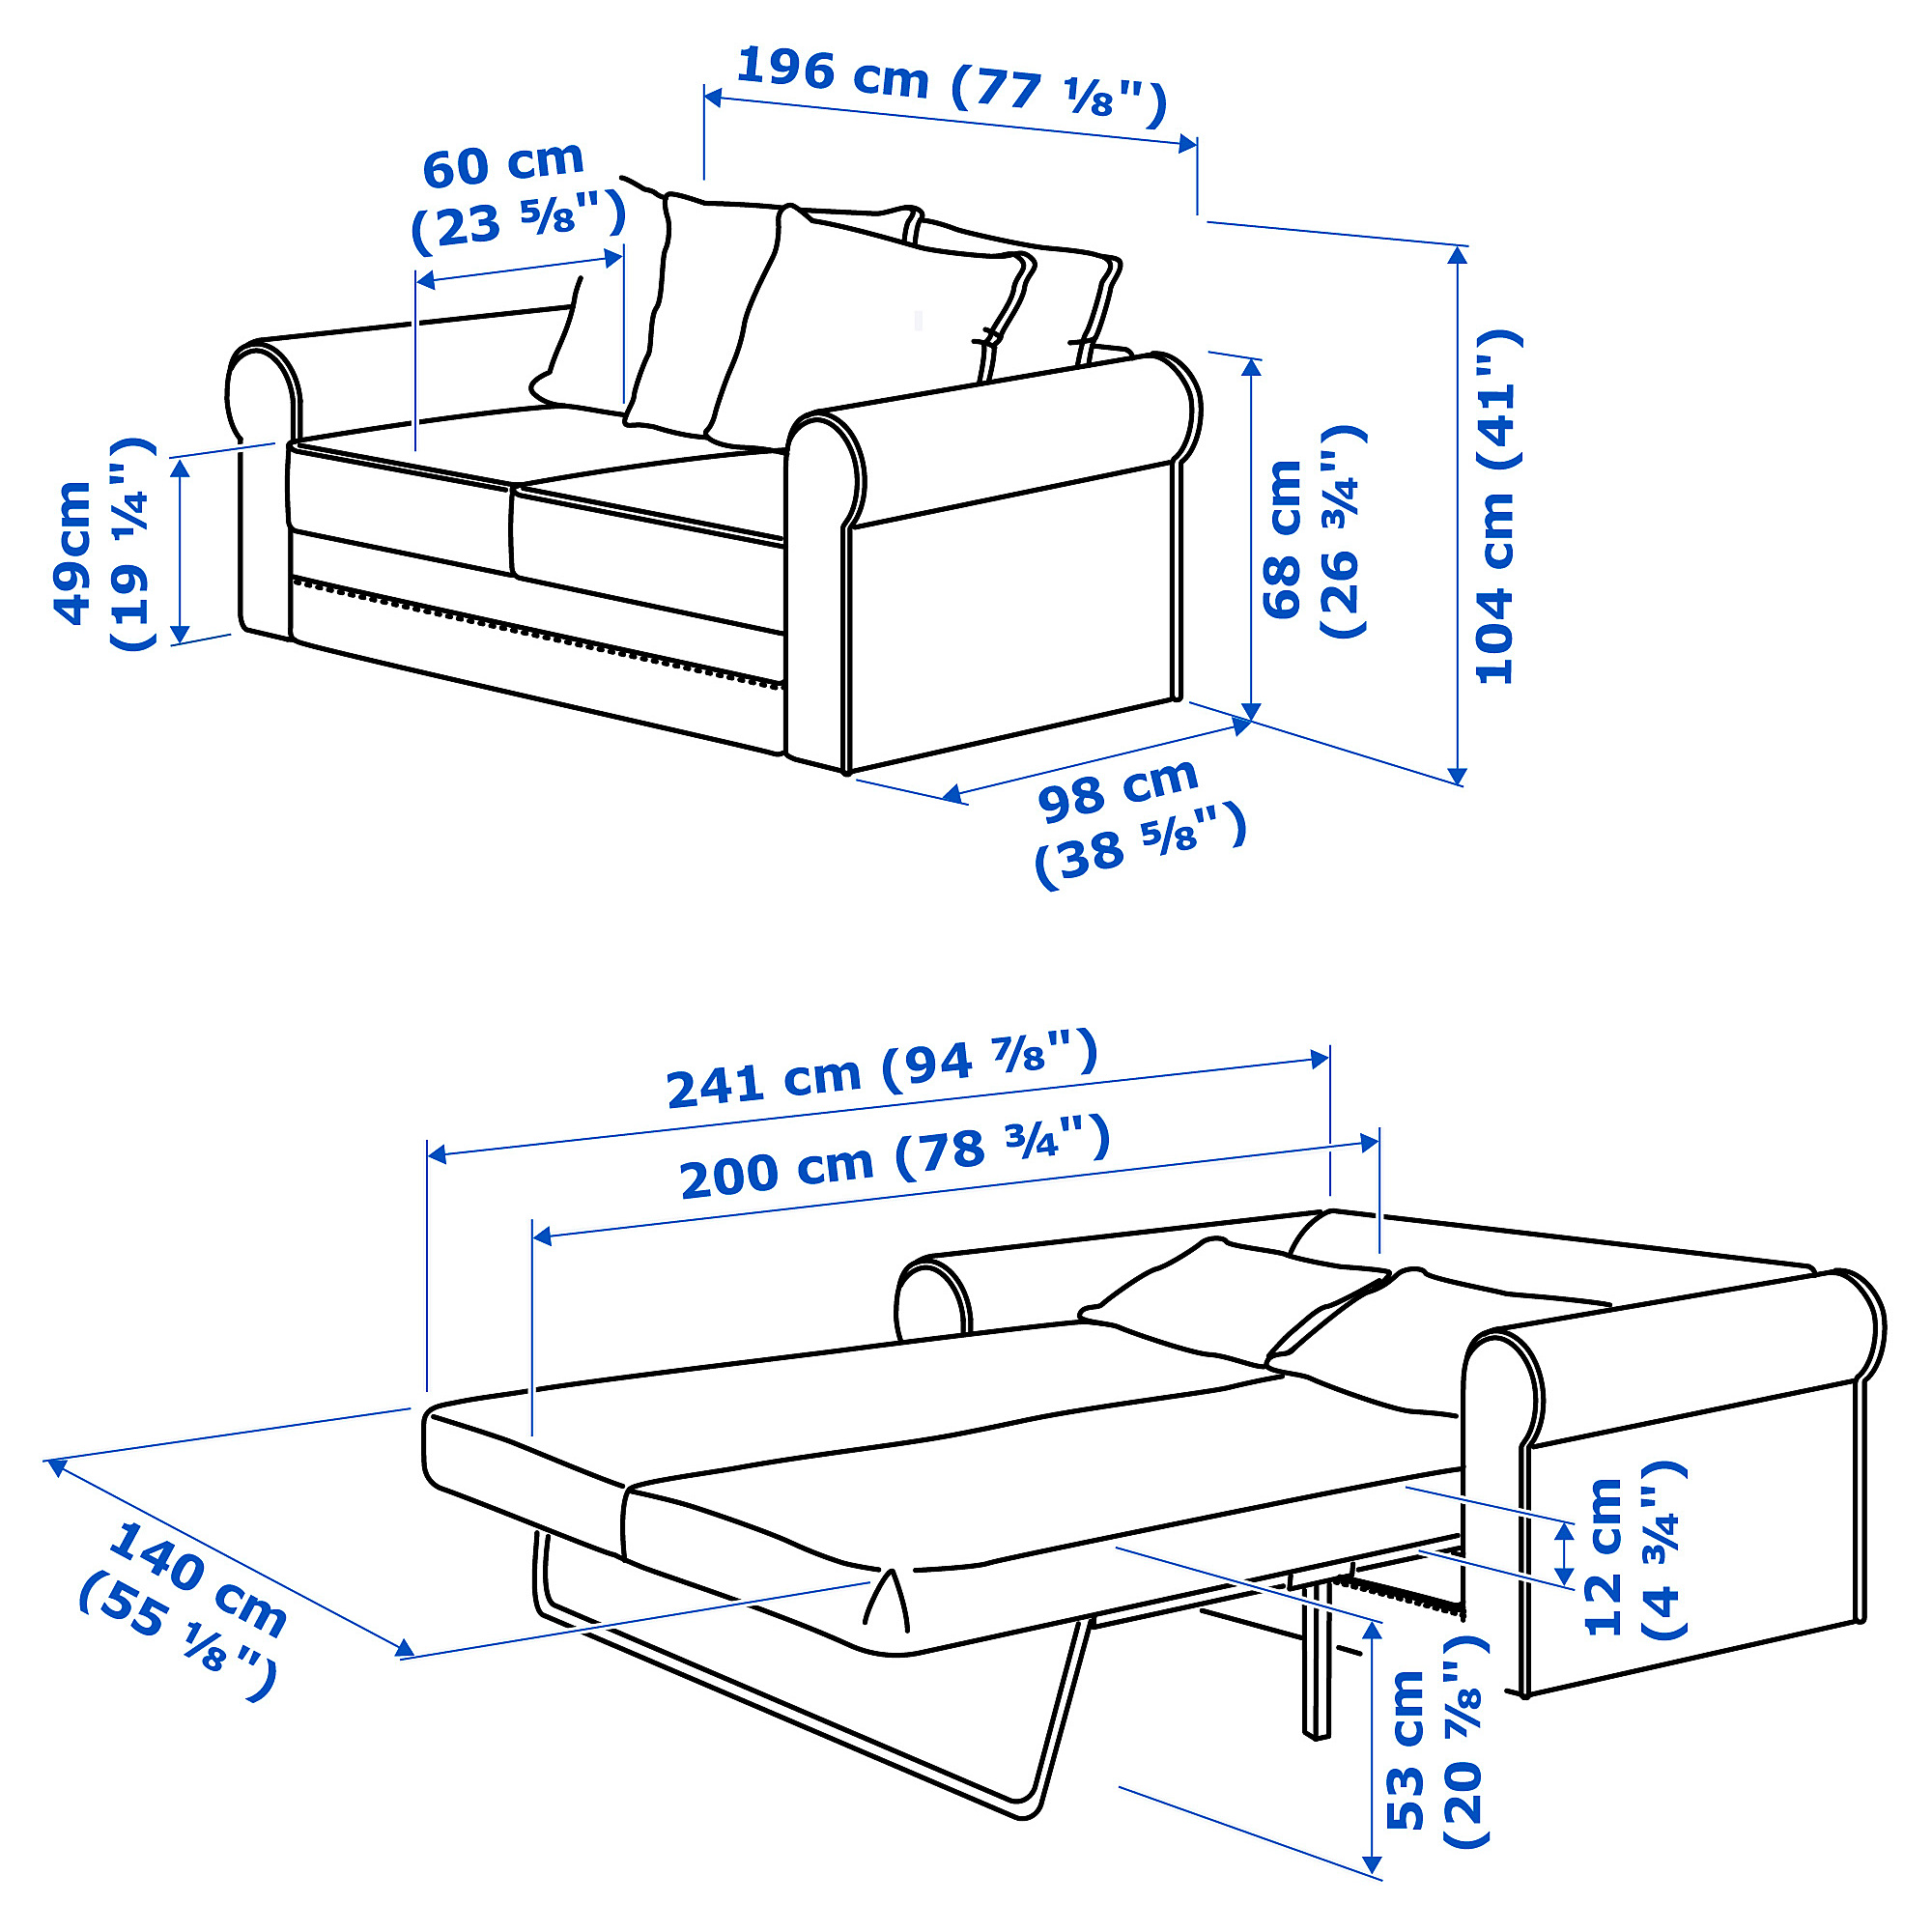 GRÖNLID 2-seat sofa-bed